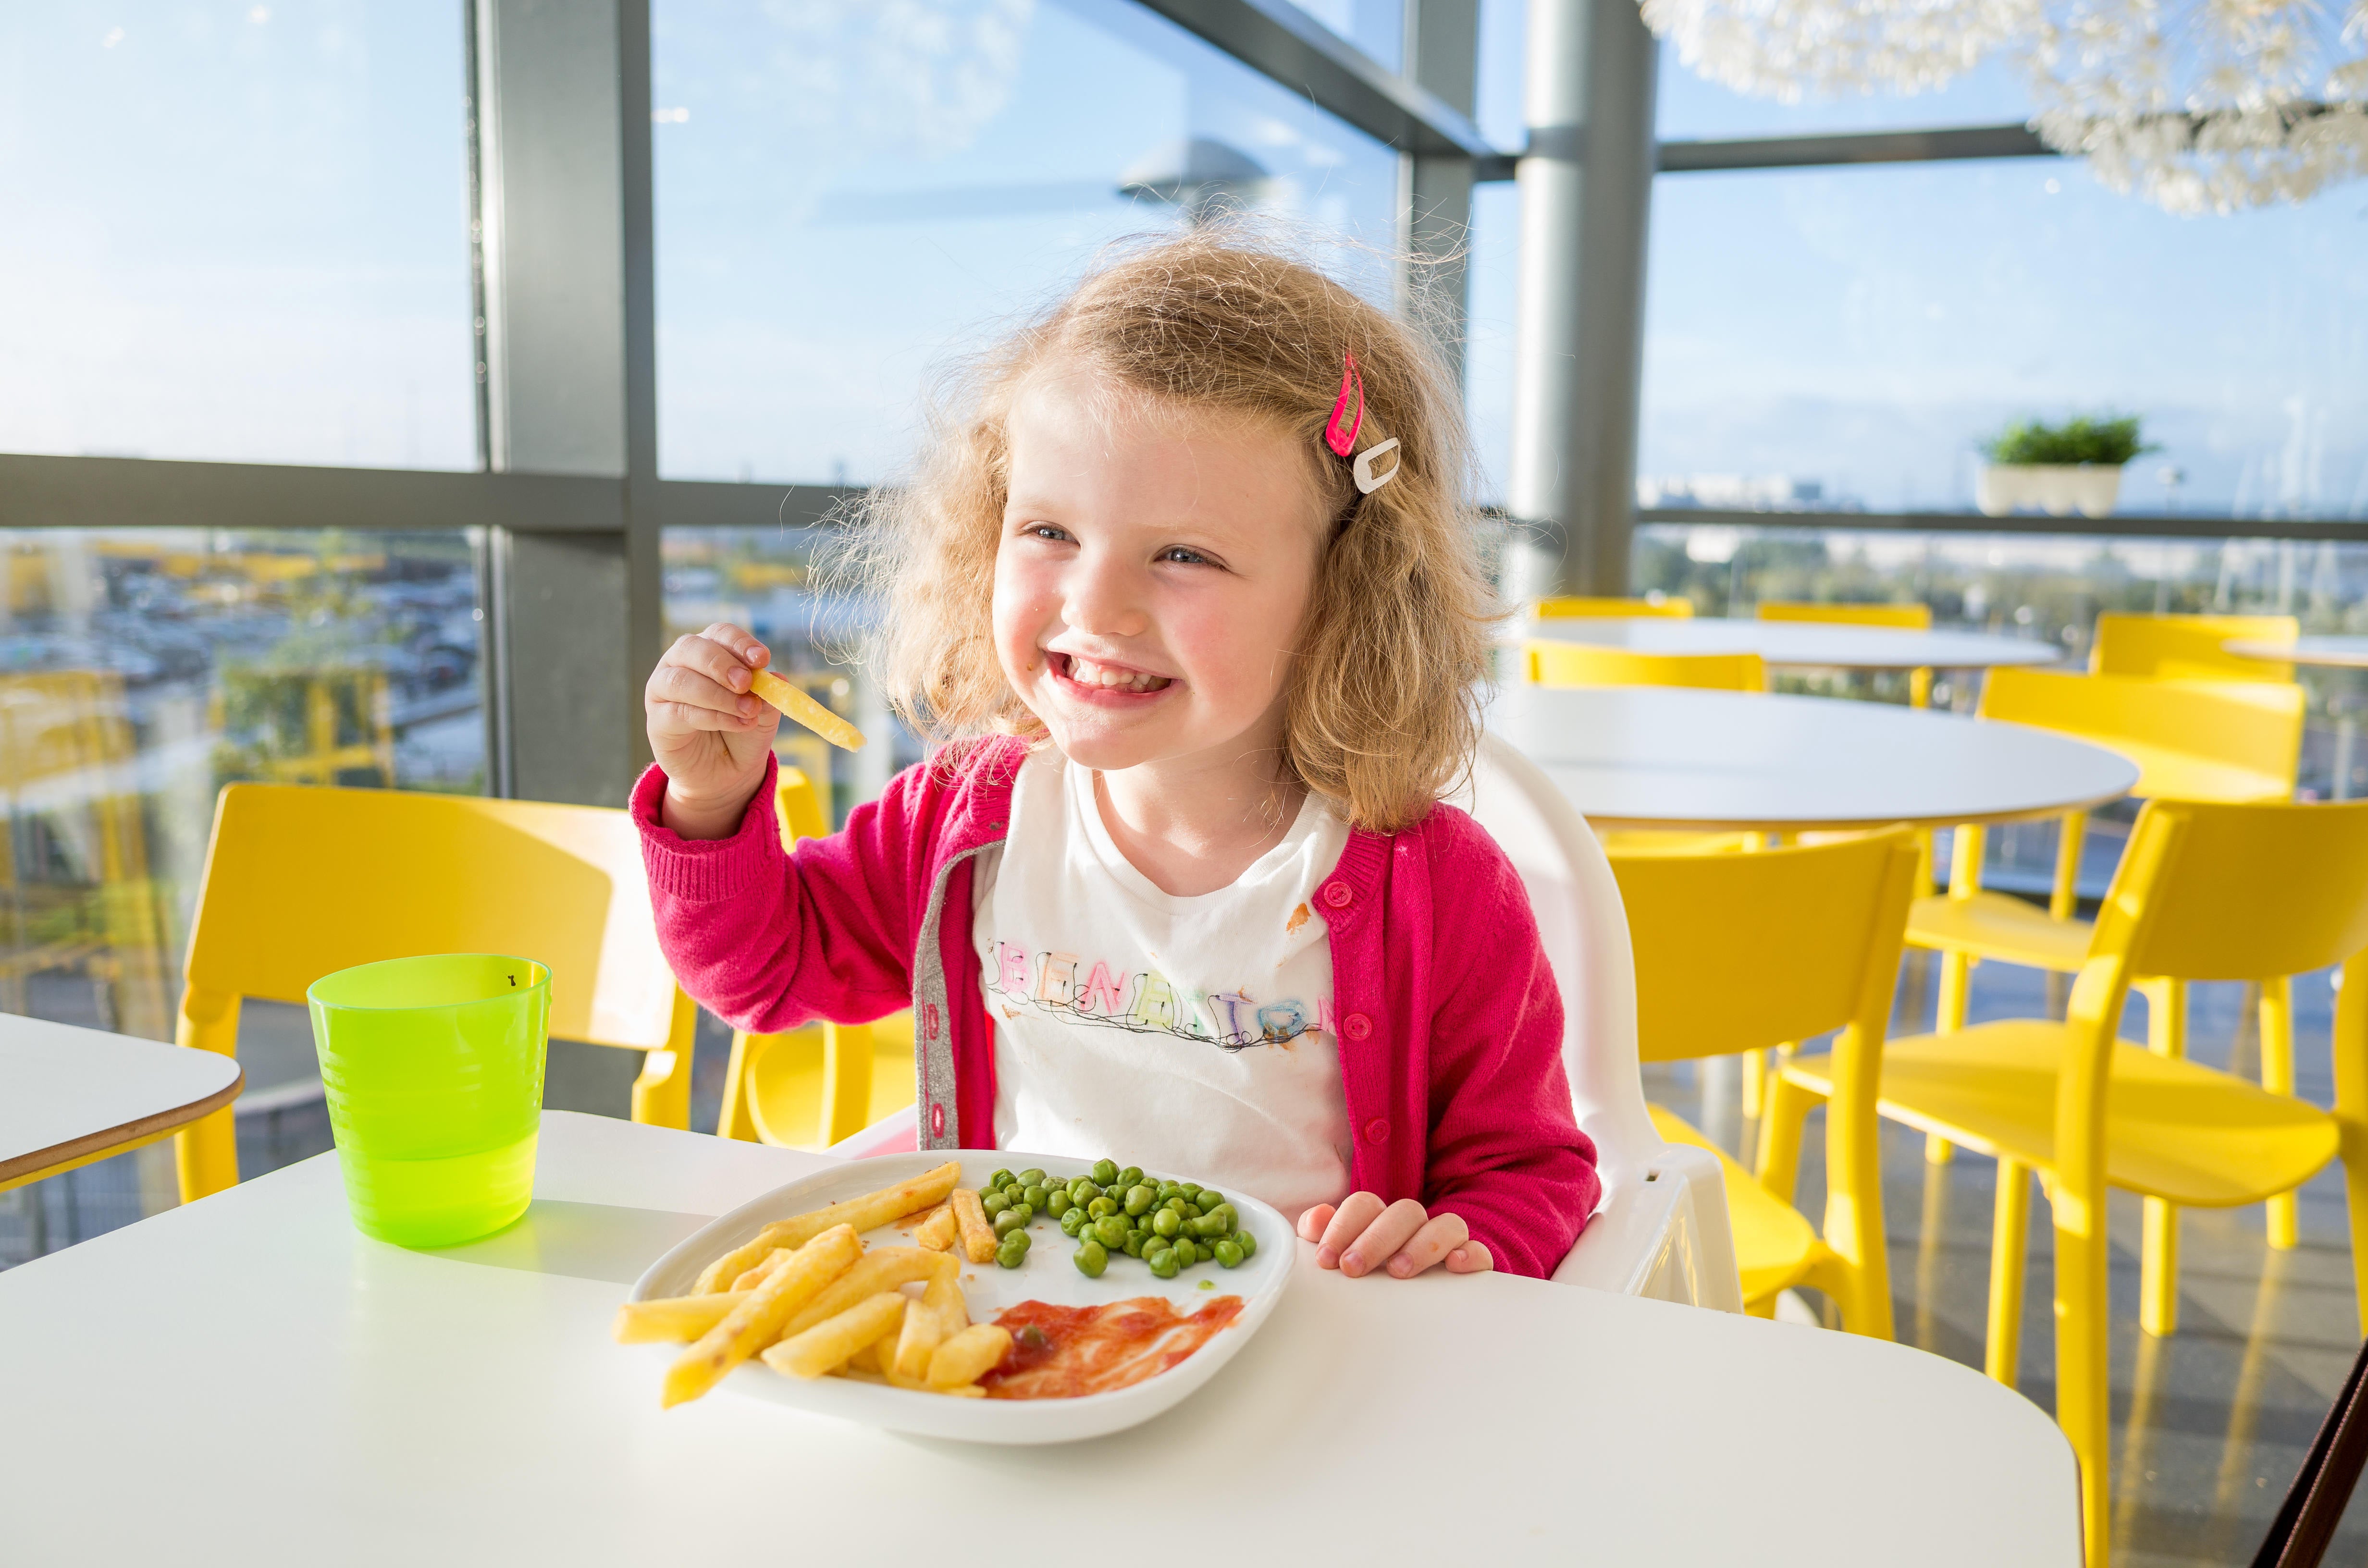 See a list of restaurants offering children free meals below